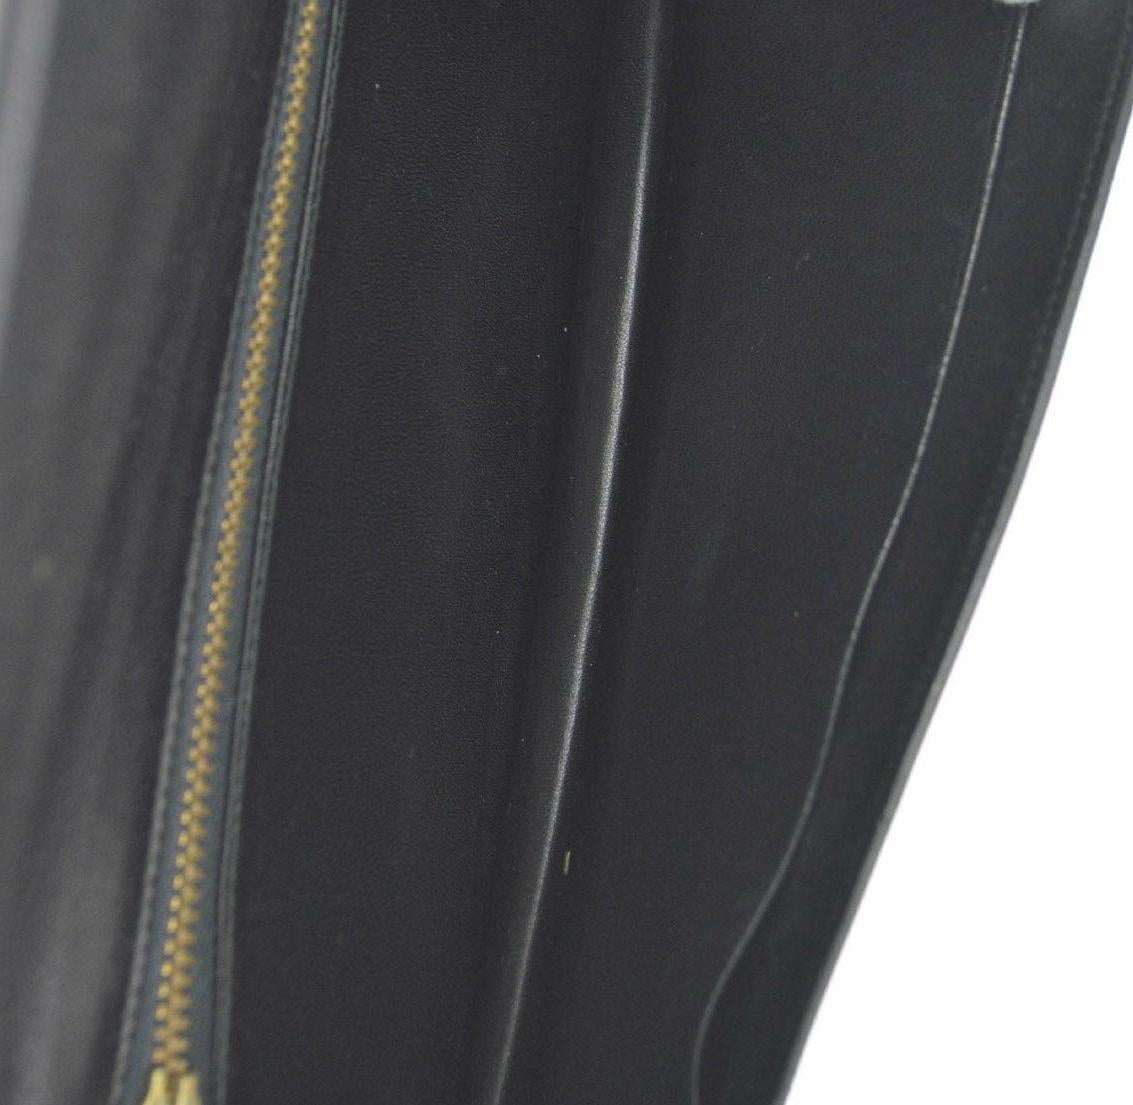 Hermes Black Leather Gold Emblem Evening Clutch Top Handle Satchel Flap Bag 4